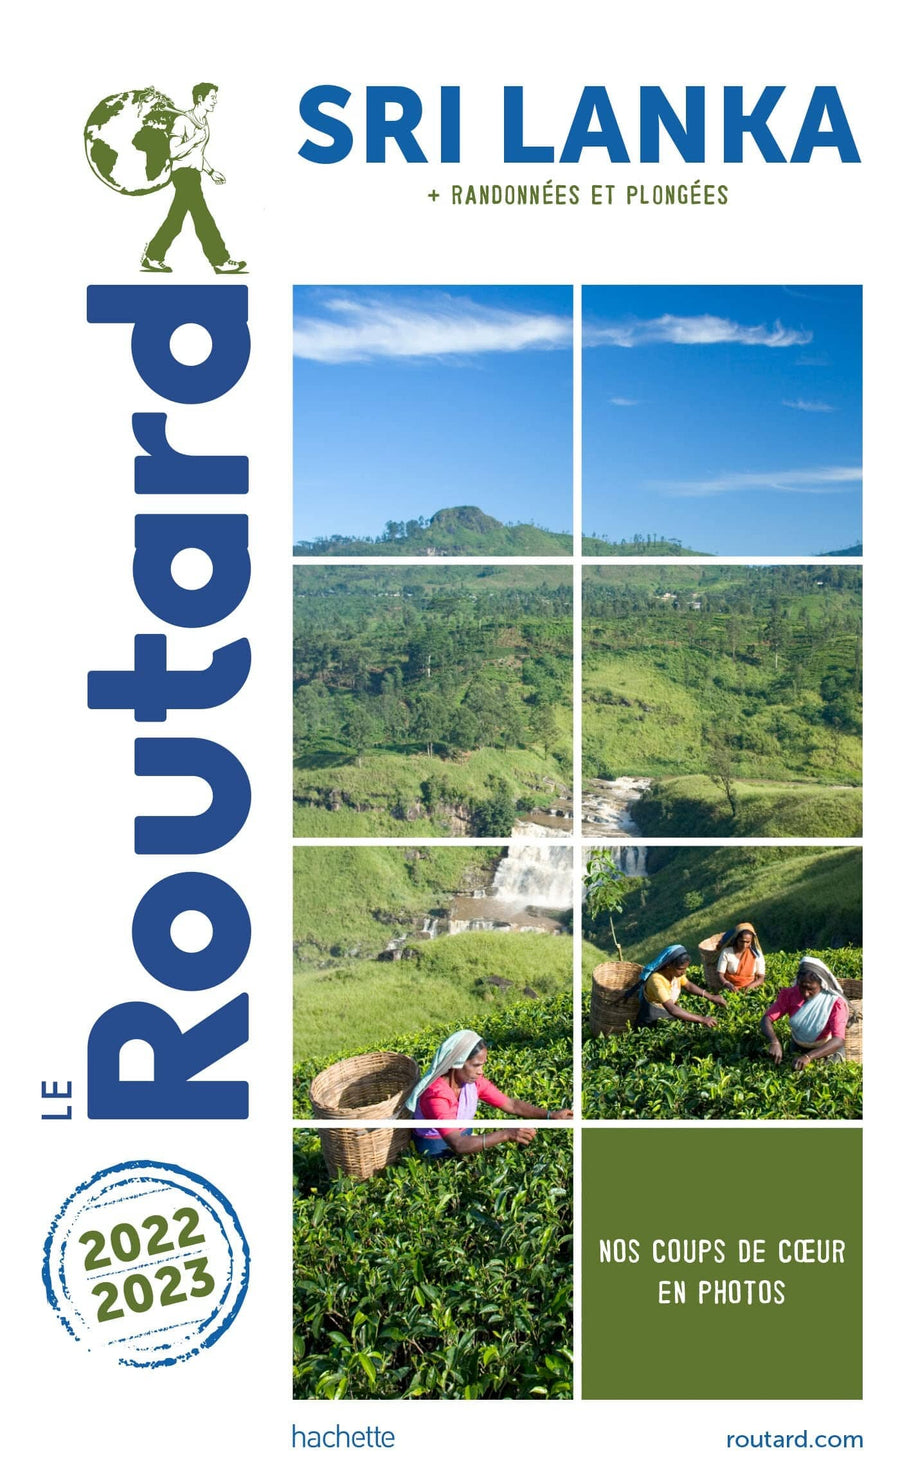 Guide du Routard - Sri Lanka 2022/23 | Hachette guide de voyage Hachette 